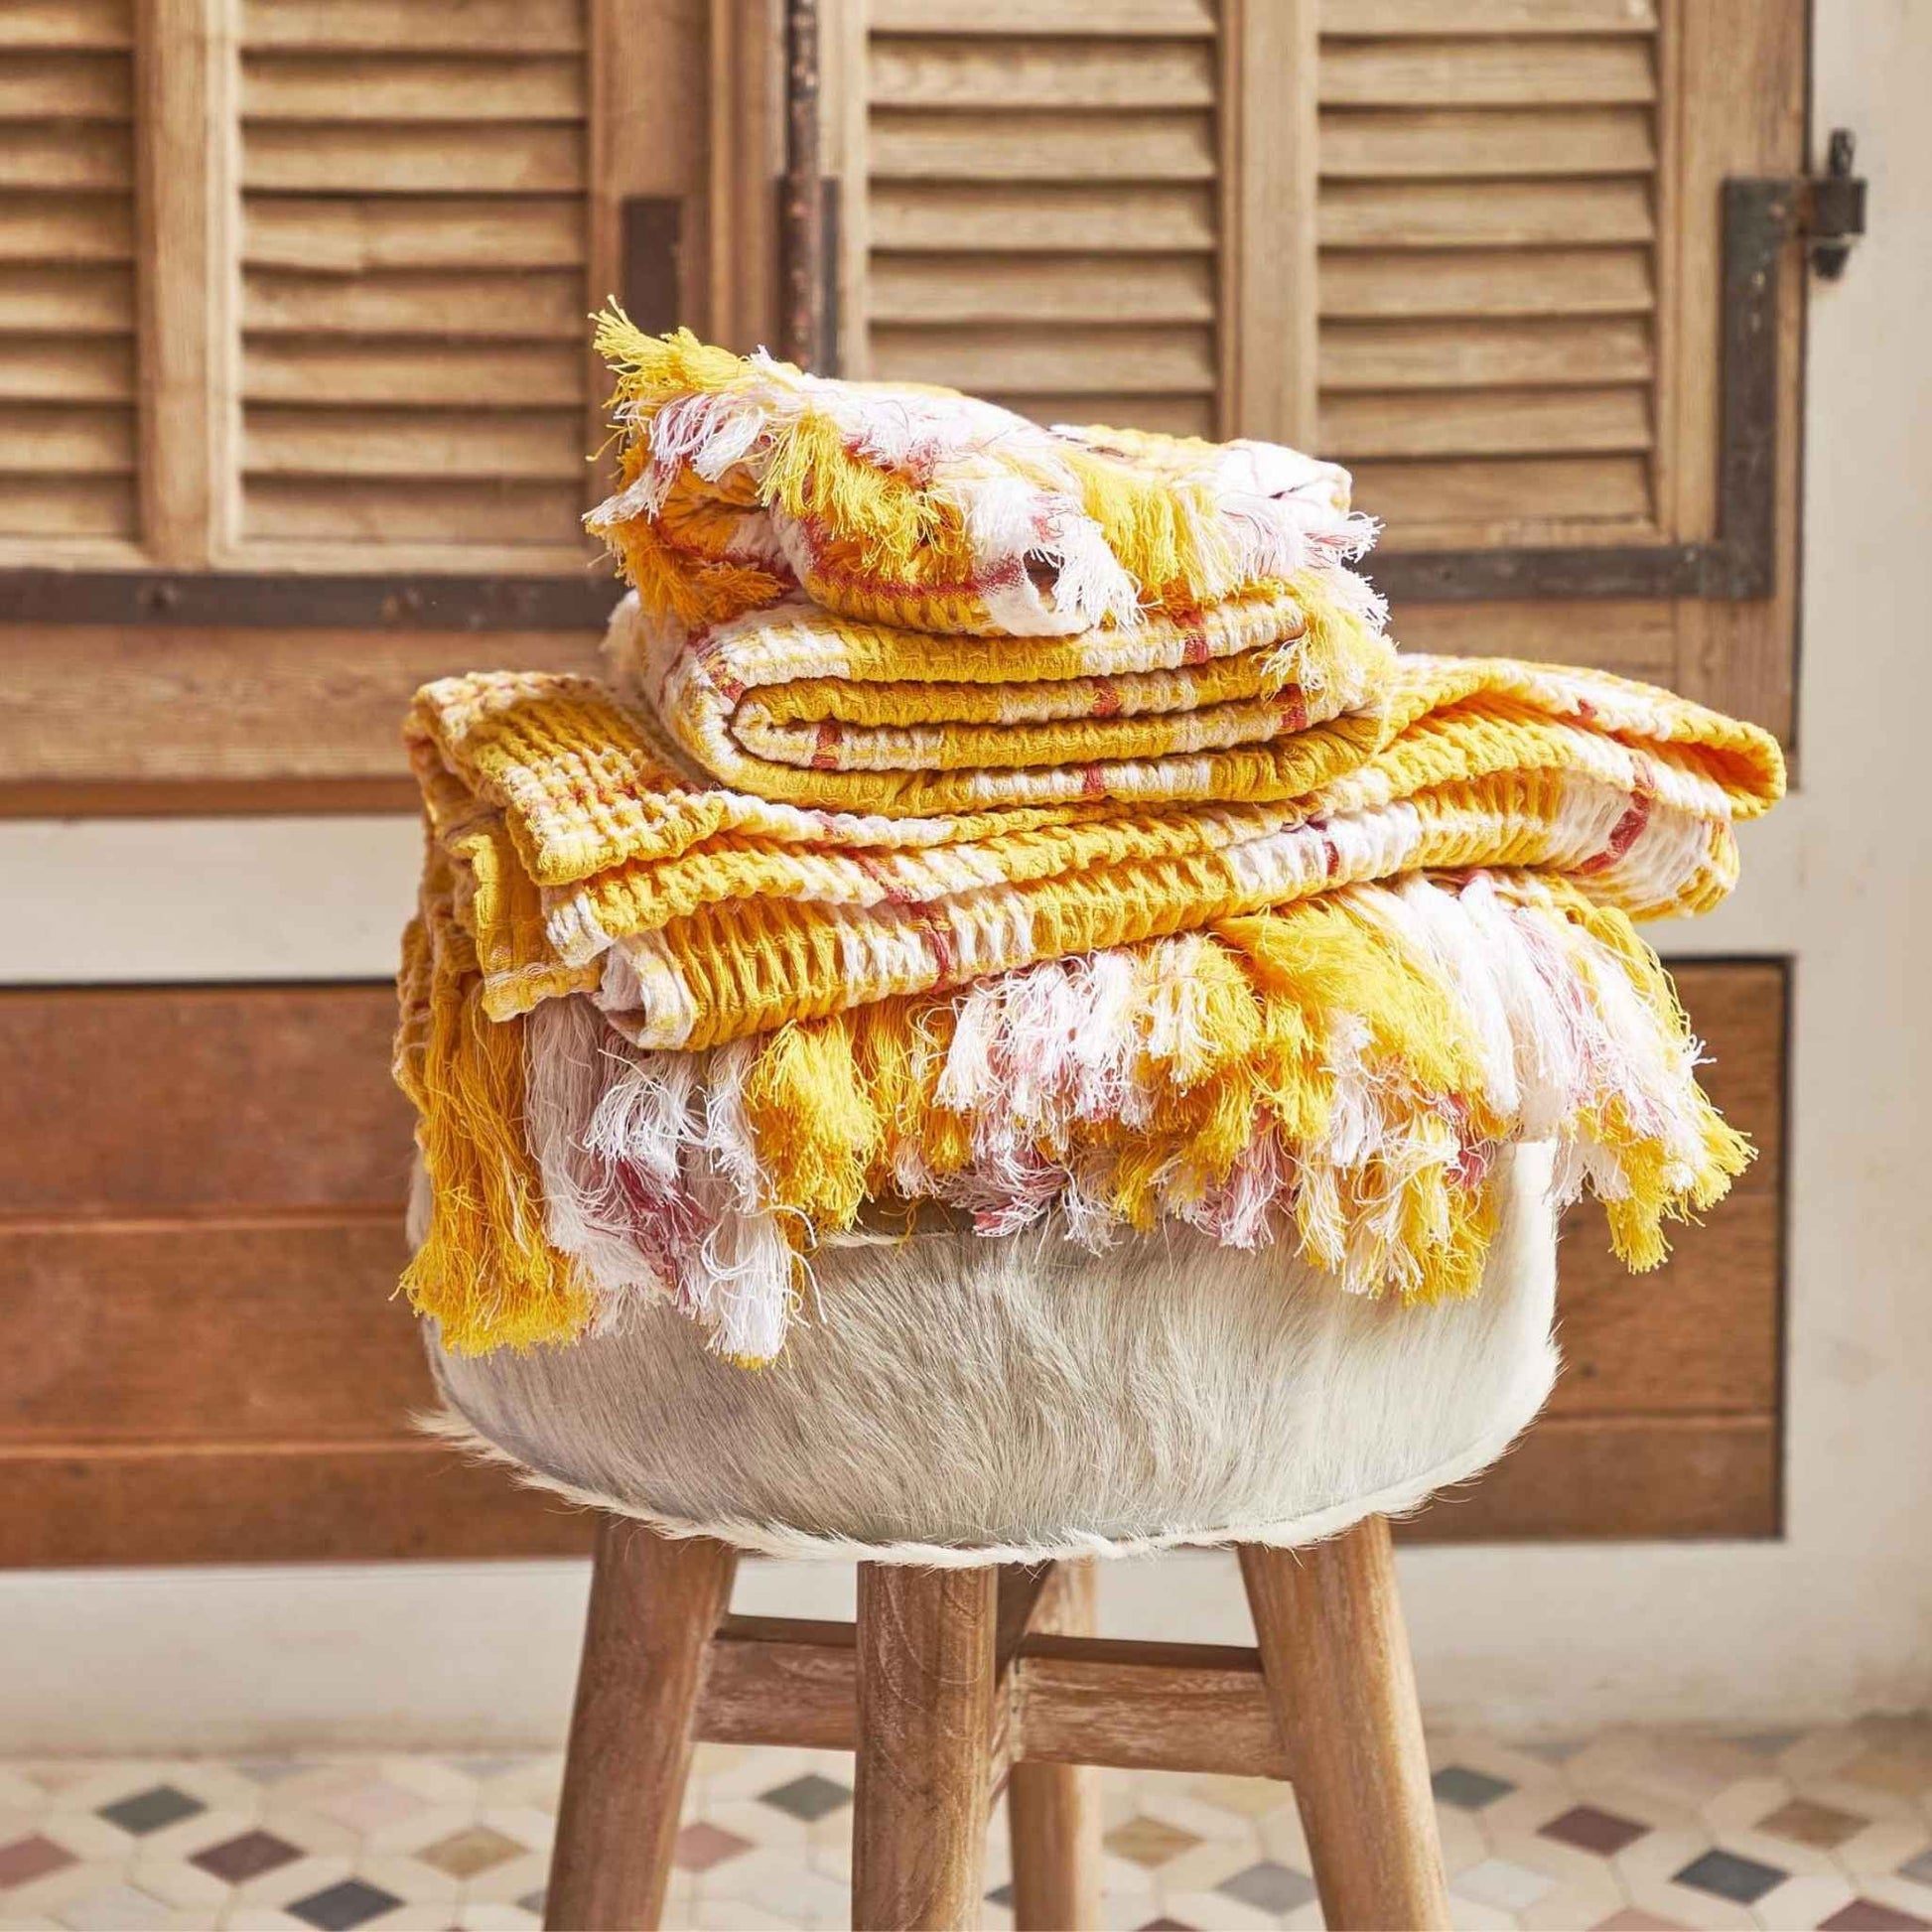 The Lemon Meringue Waffle Bath Sheet / Beach Towel features a yellow and white tartan with salmon pink stripe.